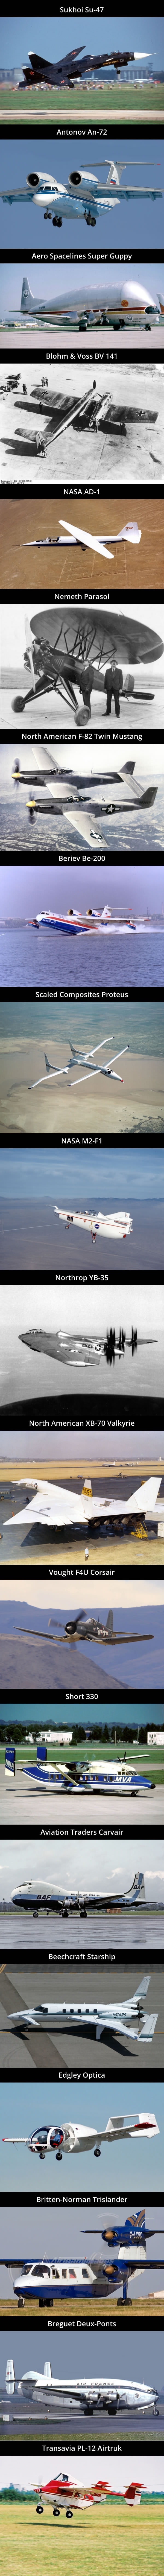 Unusual plane designs